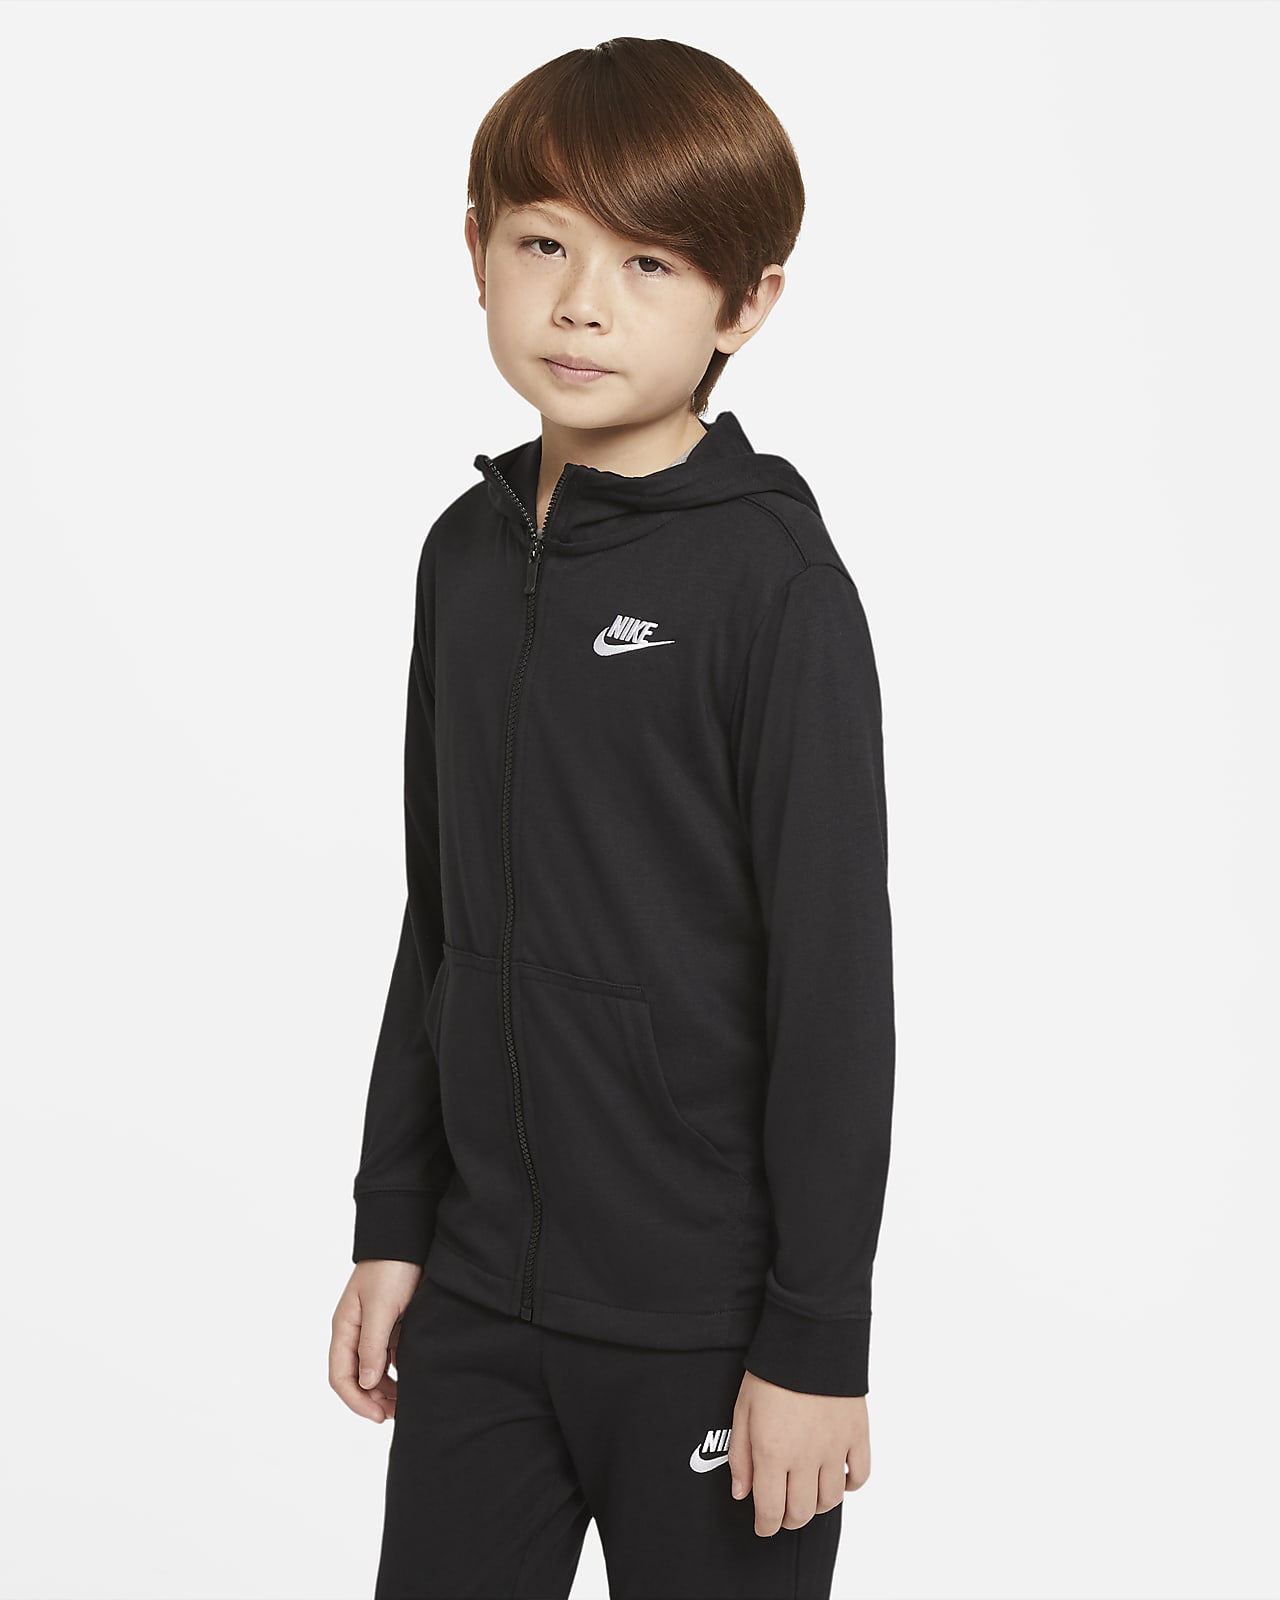 Nike Sportswear 大童 (男童) 全長式拉鍊連帽上衣